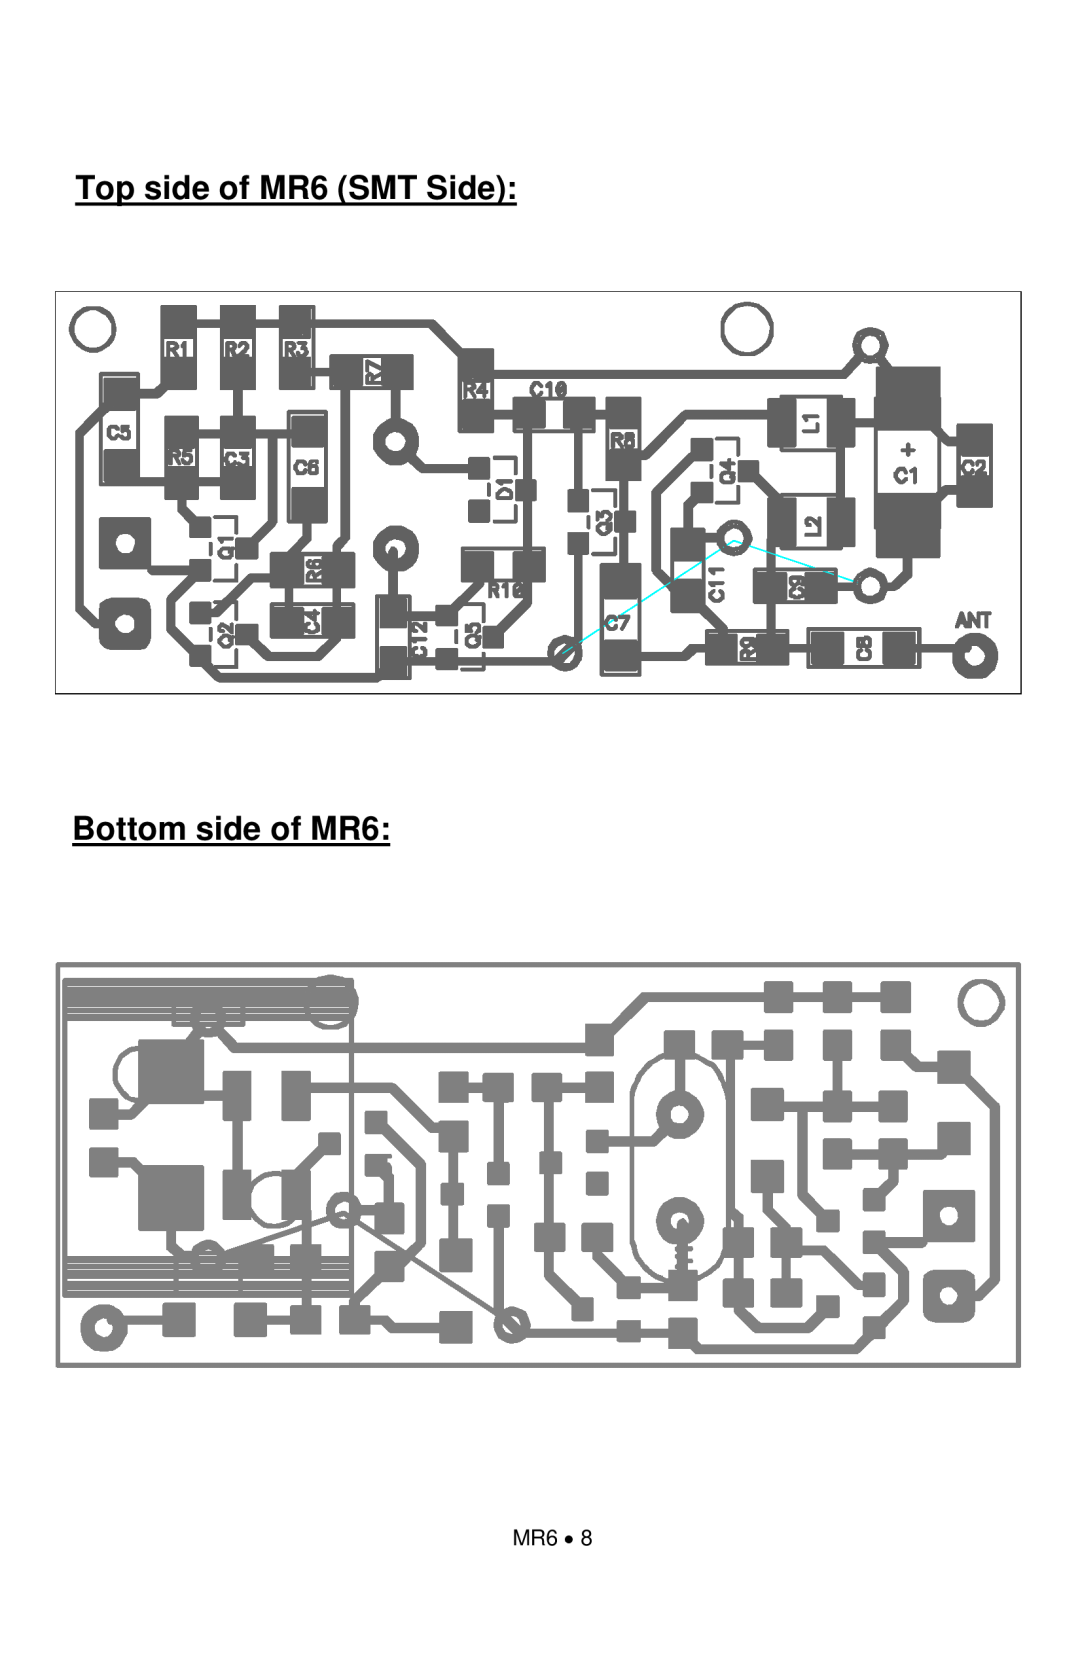 Ramsey Electronics manual Top side of MR6 SMT Side Bottom side of MR6 